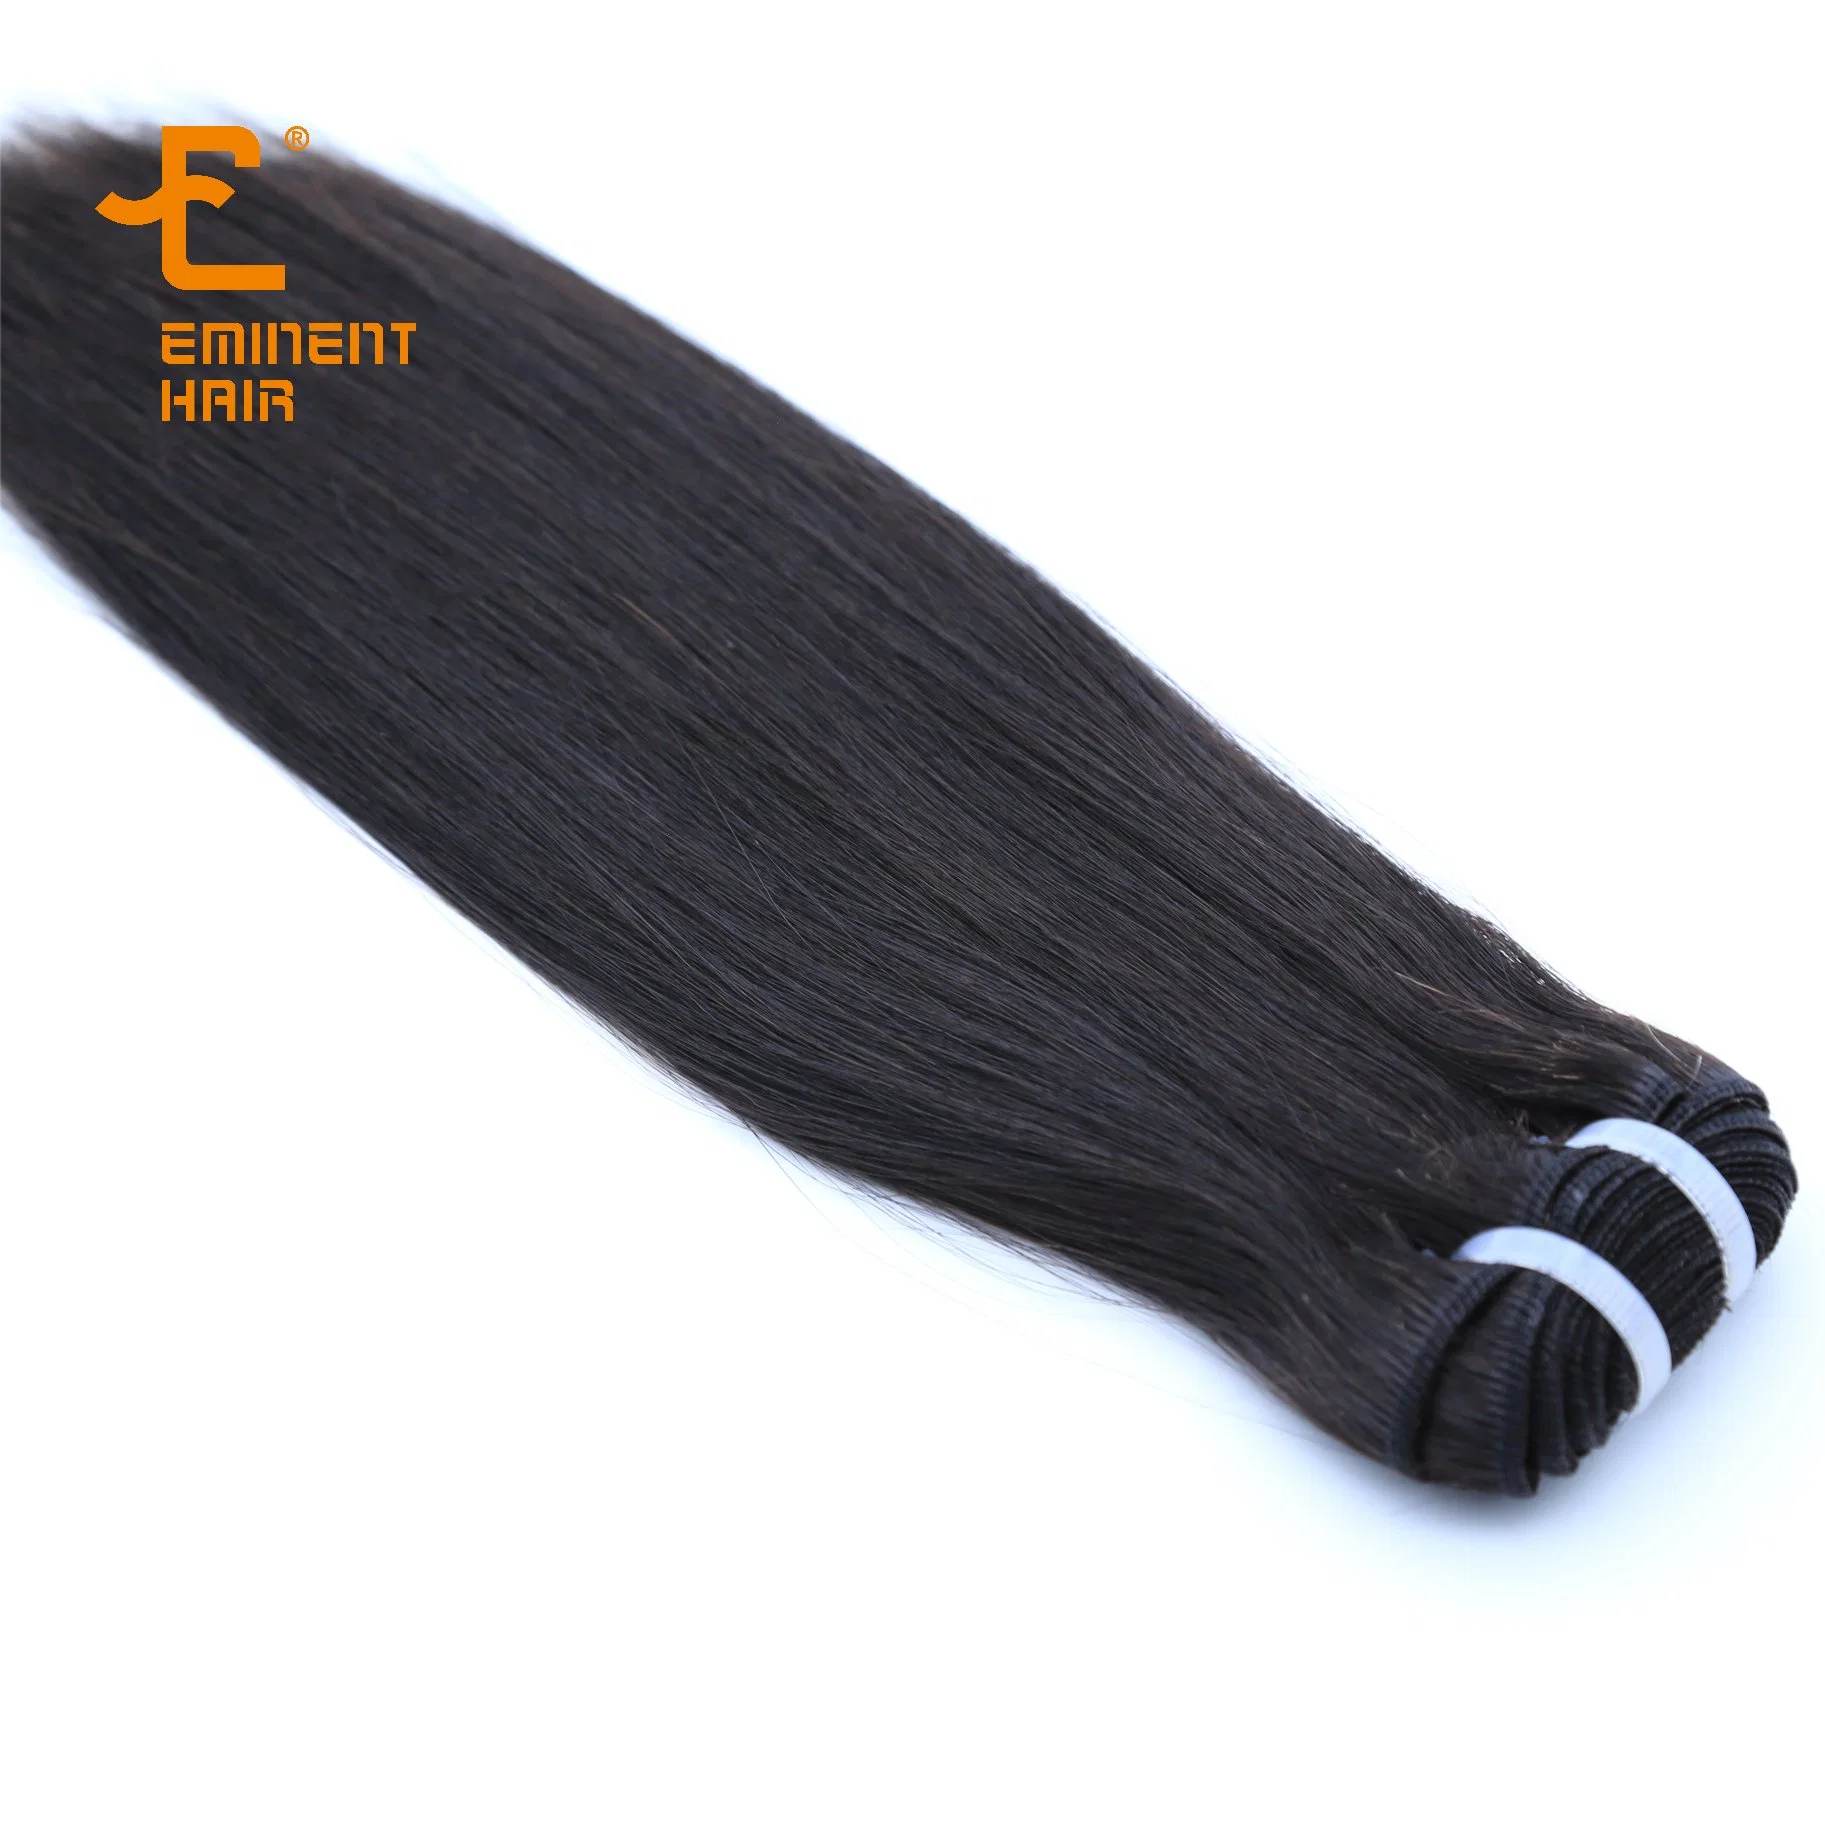 Eminent Hair Factory 10A Virgin Hair trair Straight Woft Wrect Wear